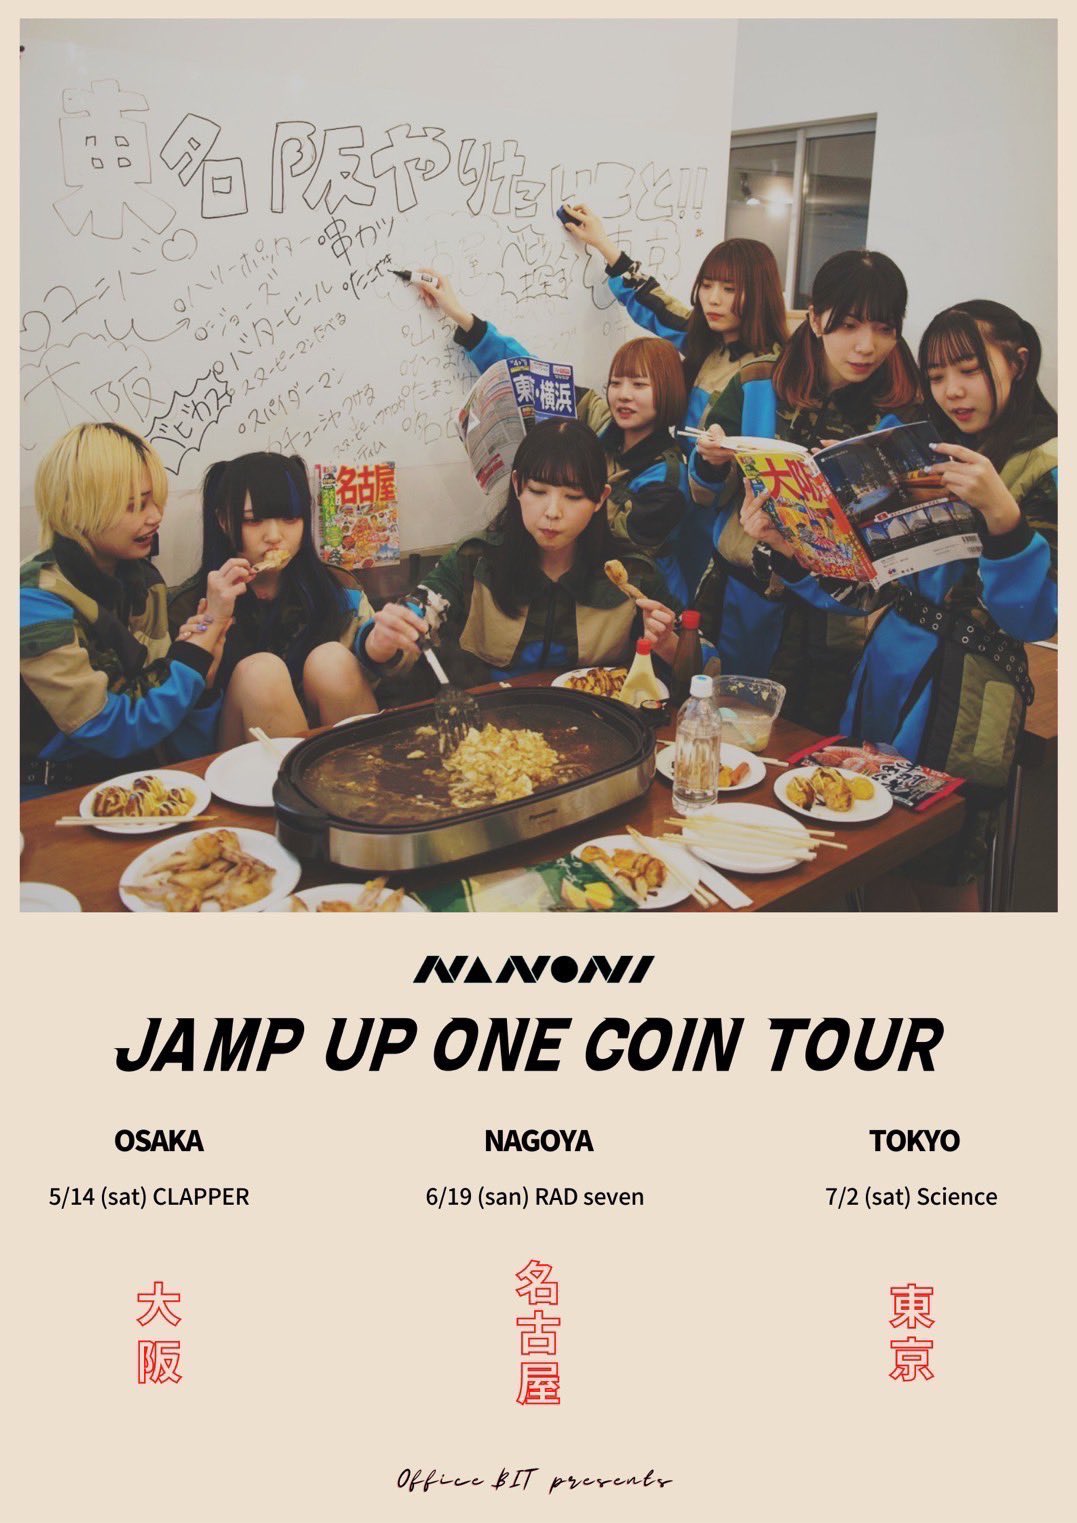 NANONI JAMP UP ONE COIN TOUR